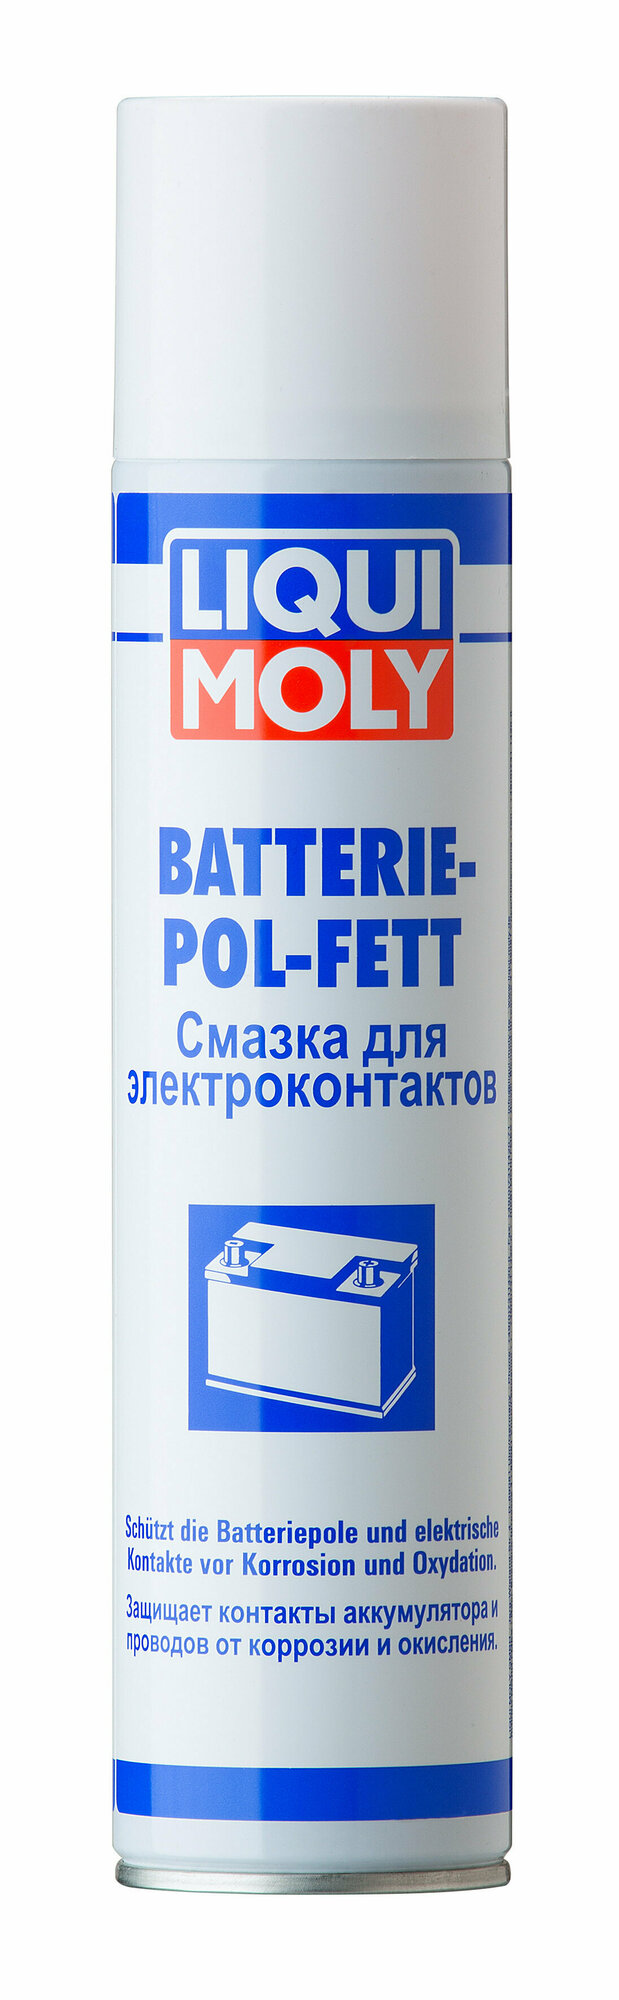 Смазка для электроконтактов Liqui Moly Batterie-Pol-Fett 0,3л